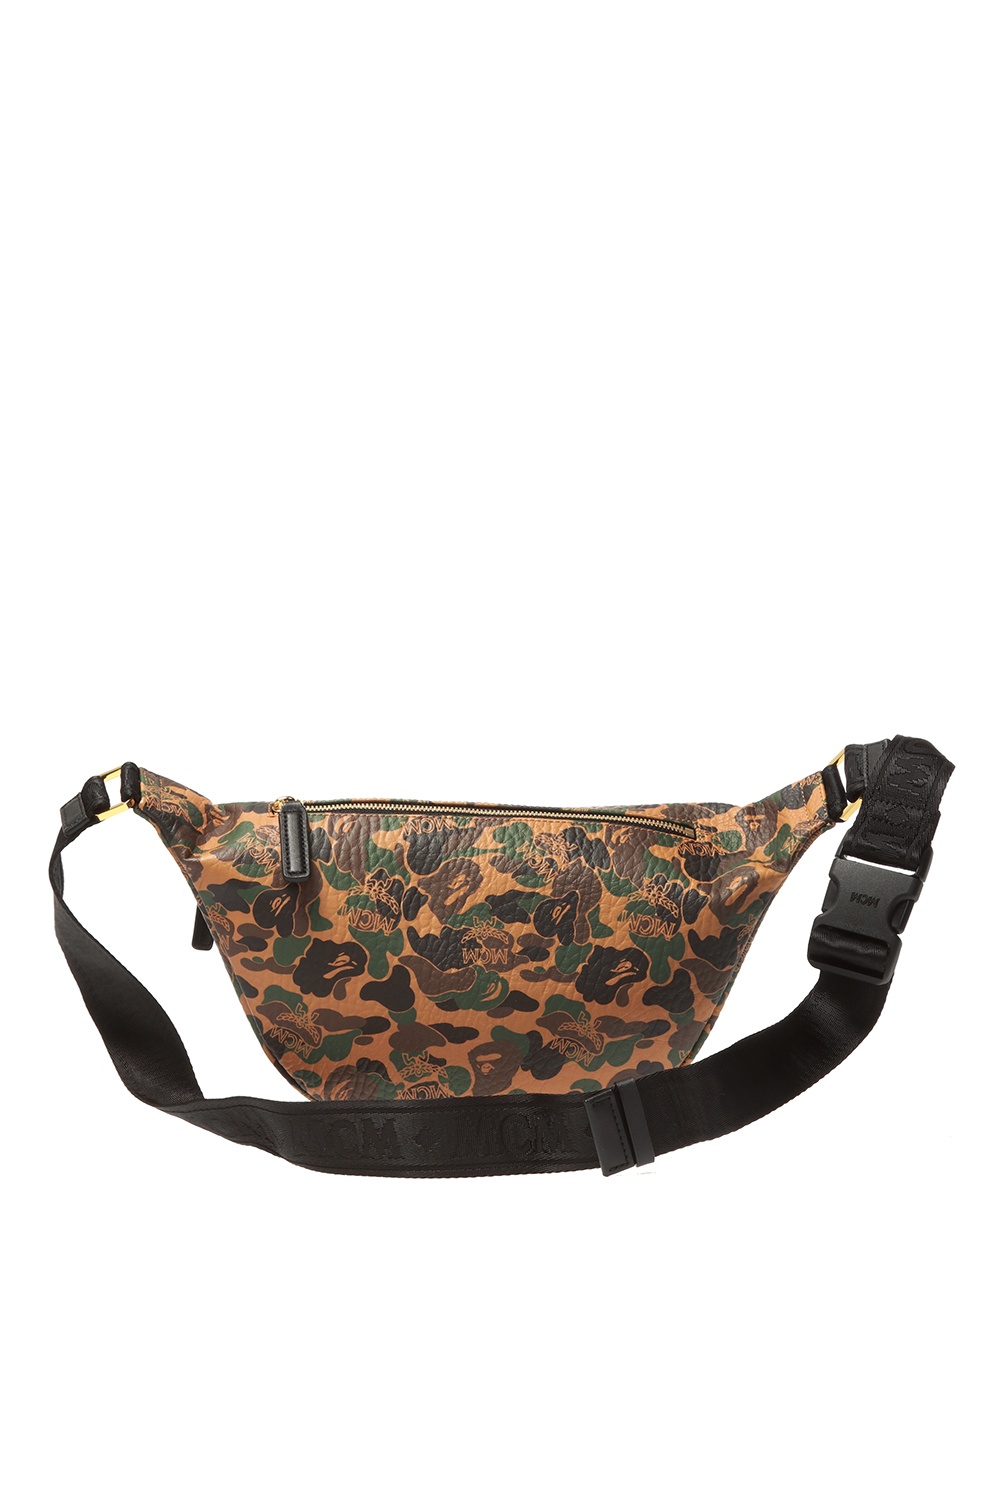 MCM ❌ BAPE waist bag (LIMITED EDITION), Men's Fashion, Bags